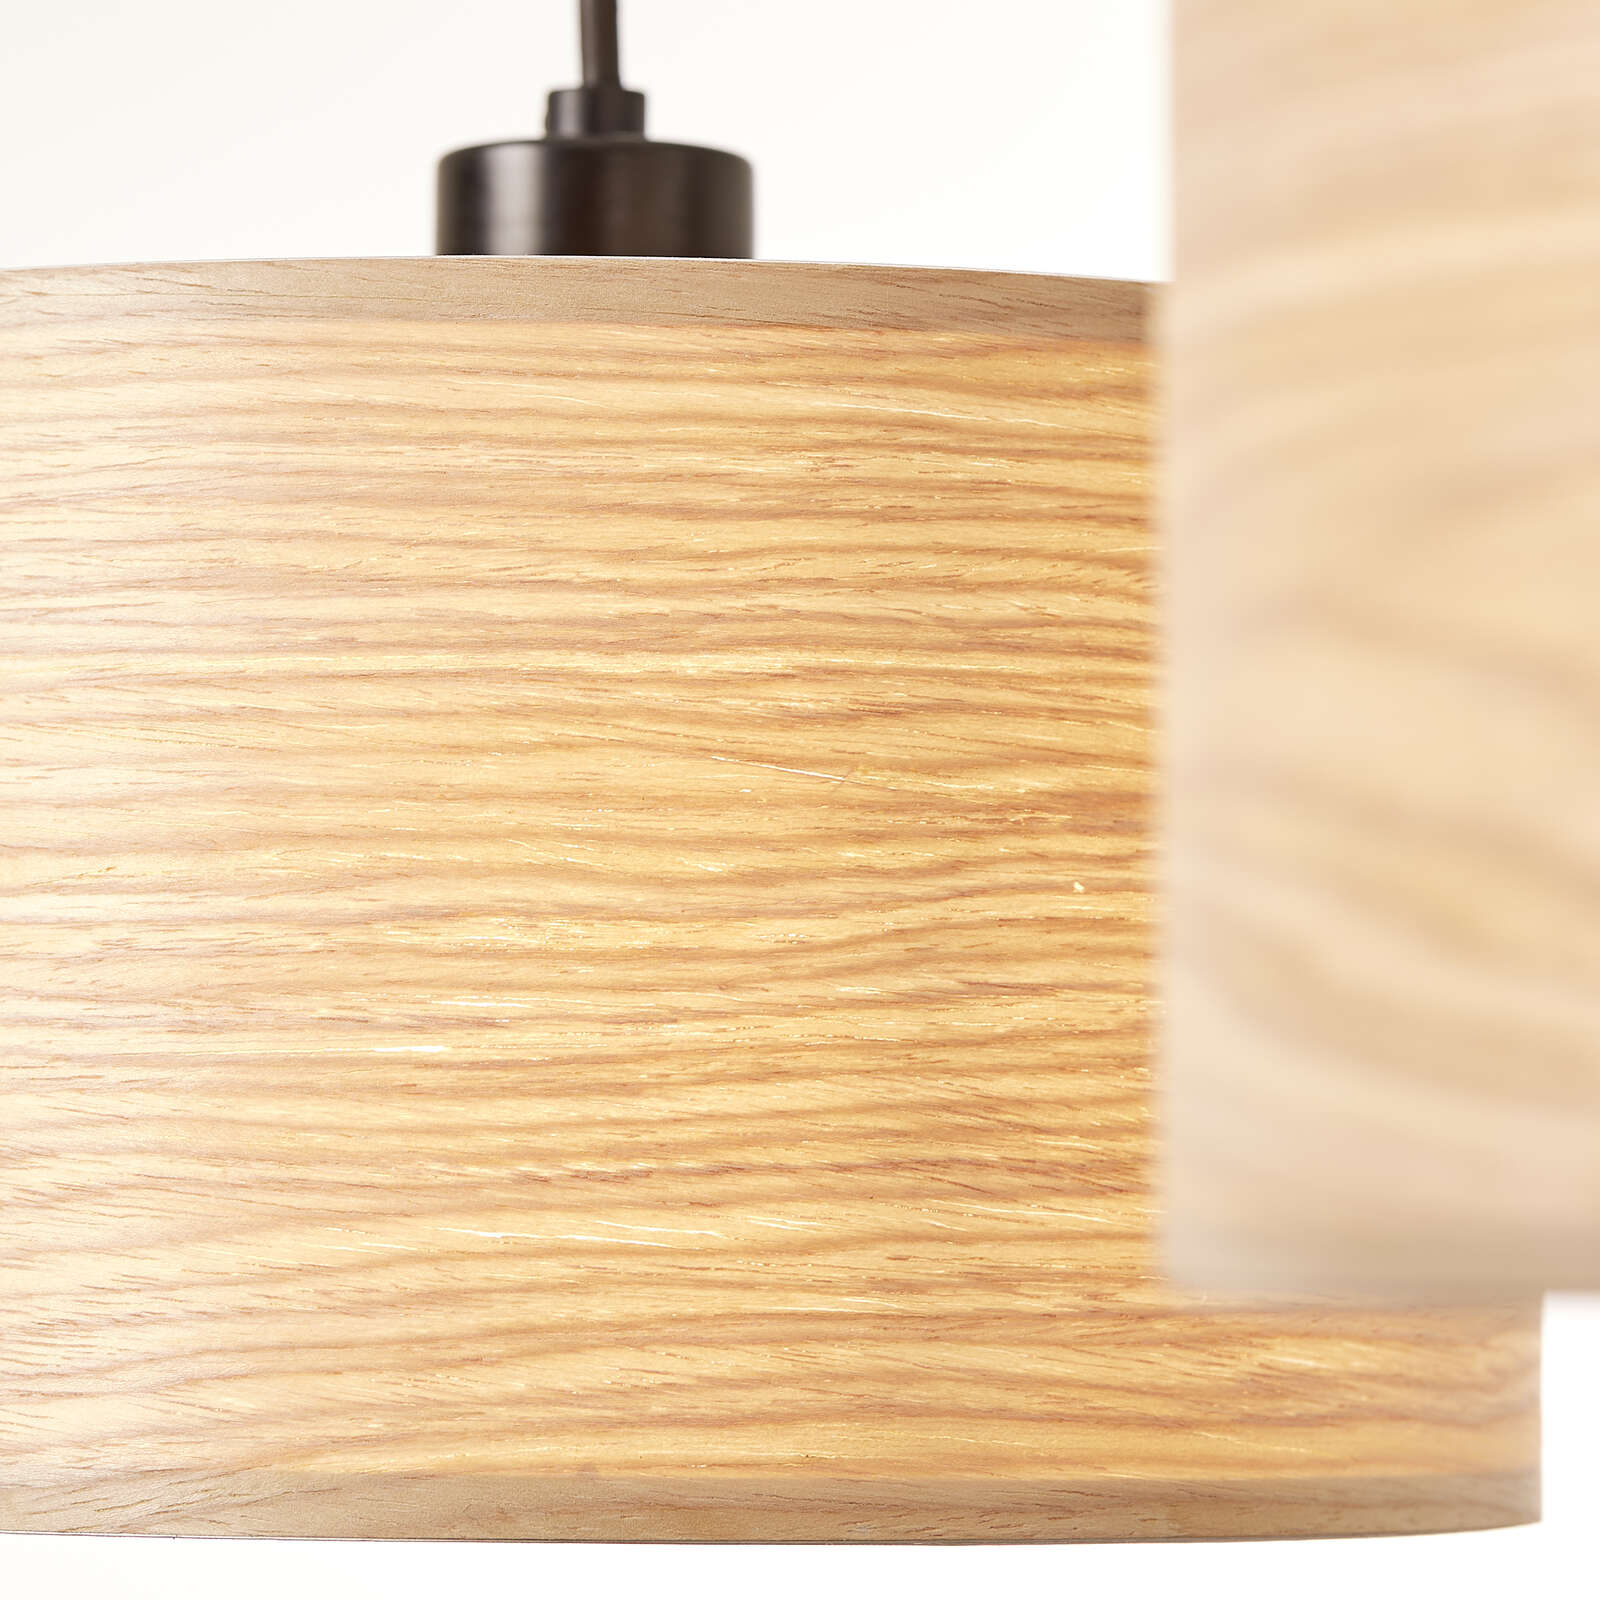             Lámpara colgante de madera - Michael 5 - Beige
        